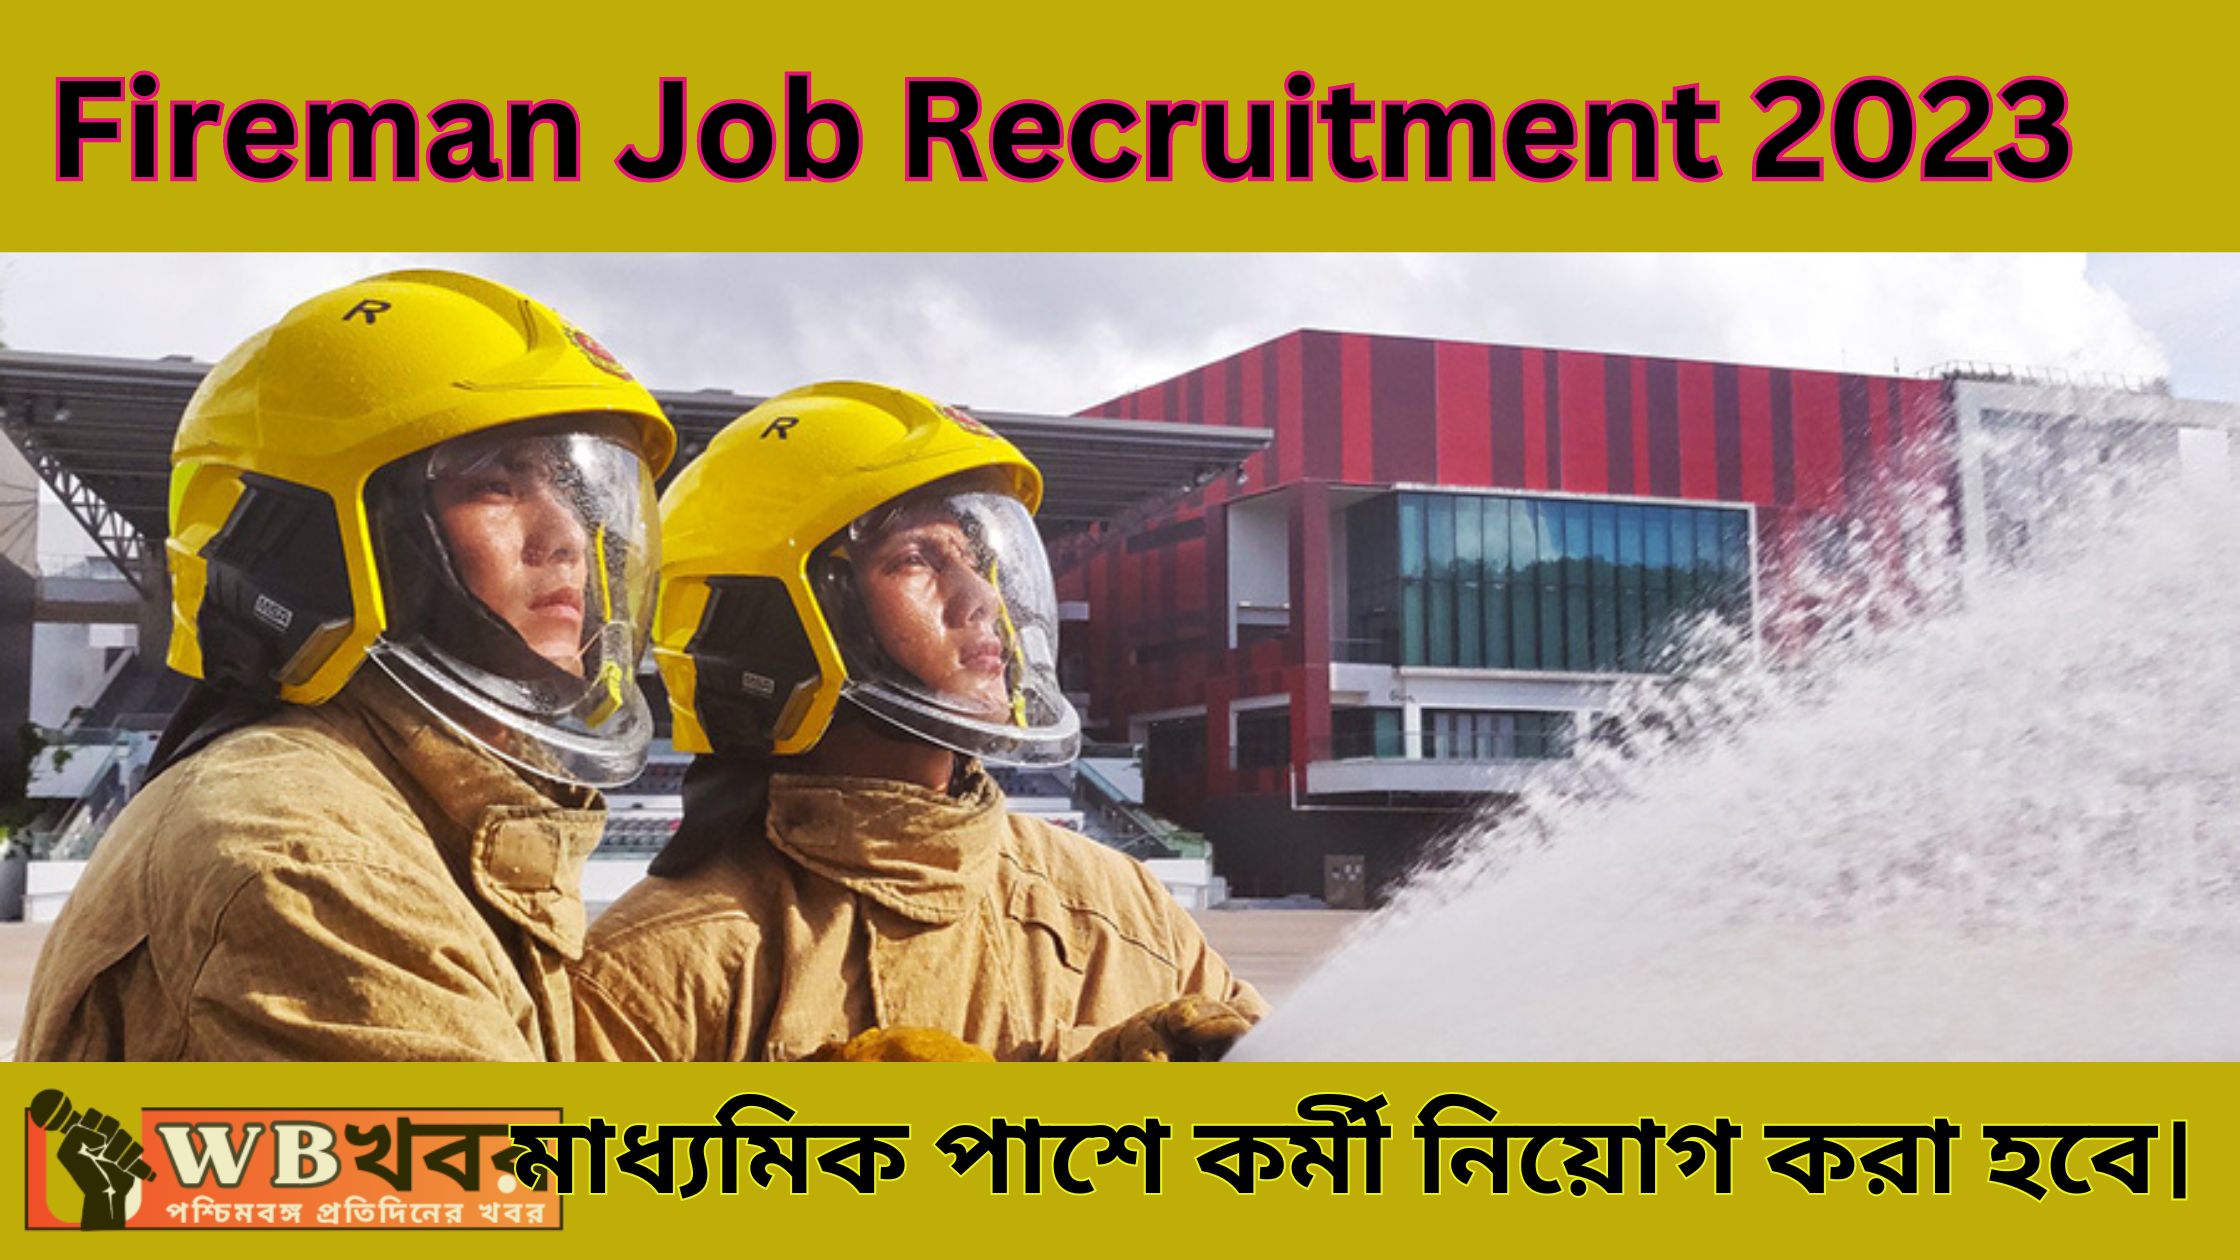 Fireman Job Recruitment 2023 ফায়ারম্যান পদে মাধ্যমিক পাশে কর্মী নিয়োগ করা হবে।